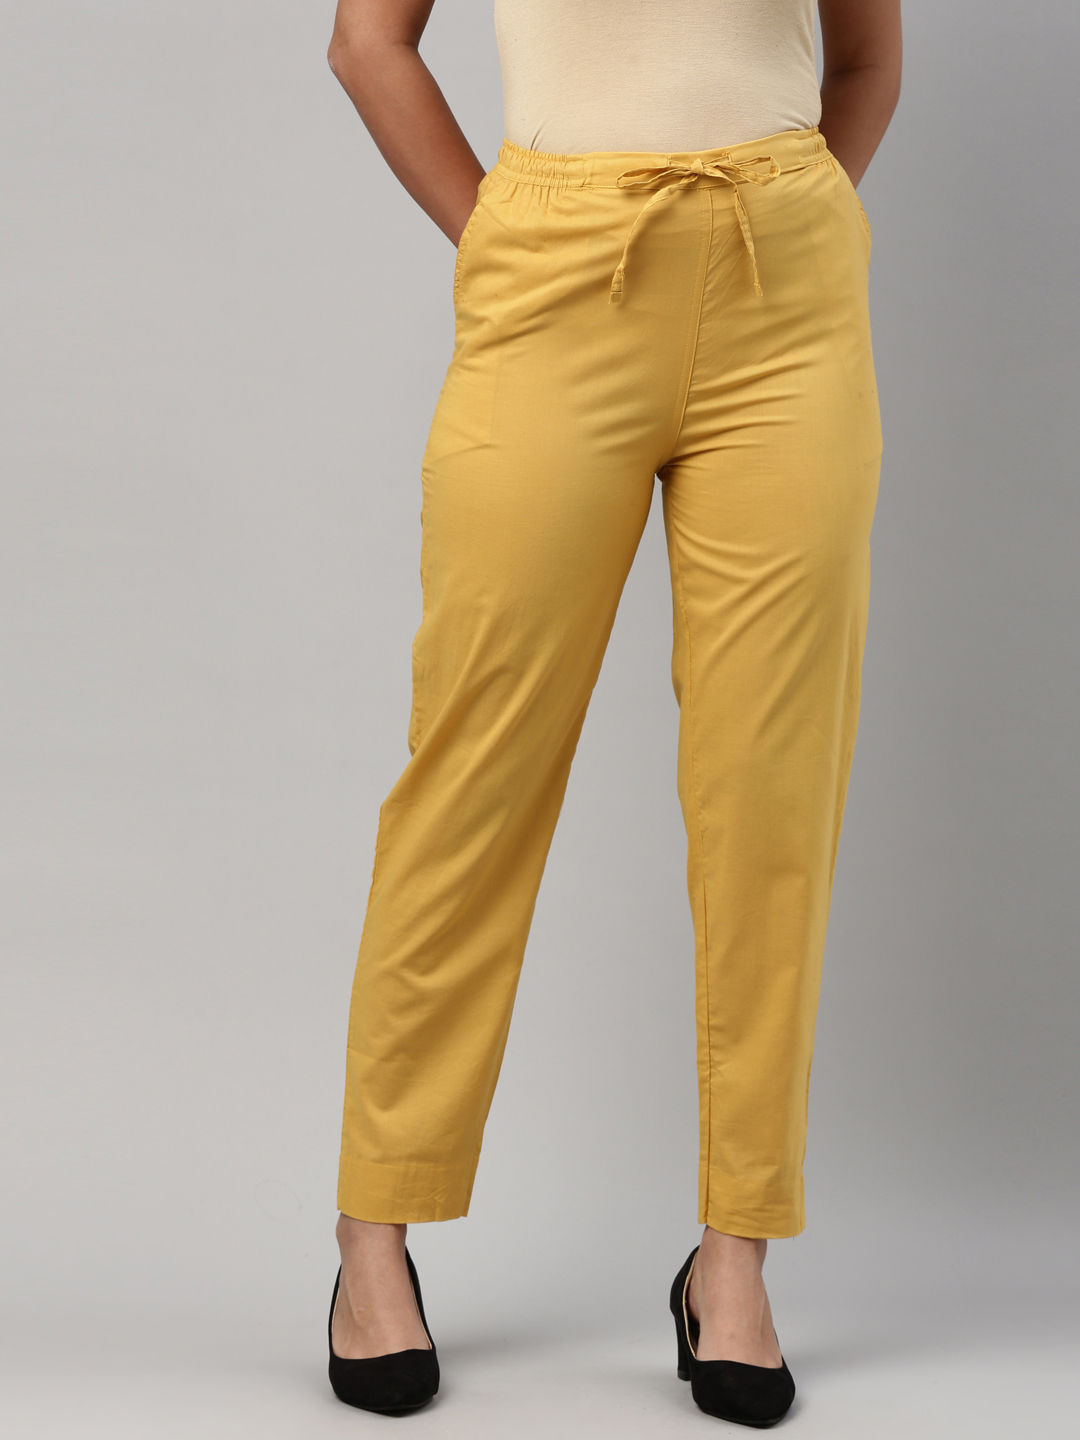 Light Yellow Pant  Amazonin Clothing  Accessories